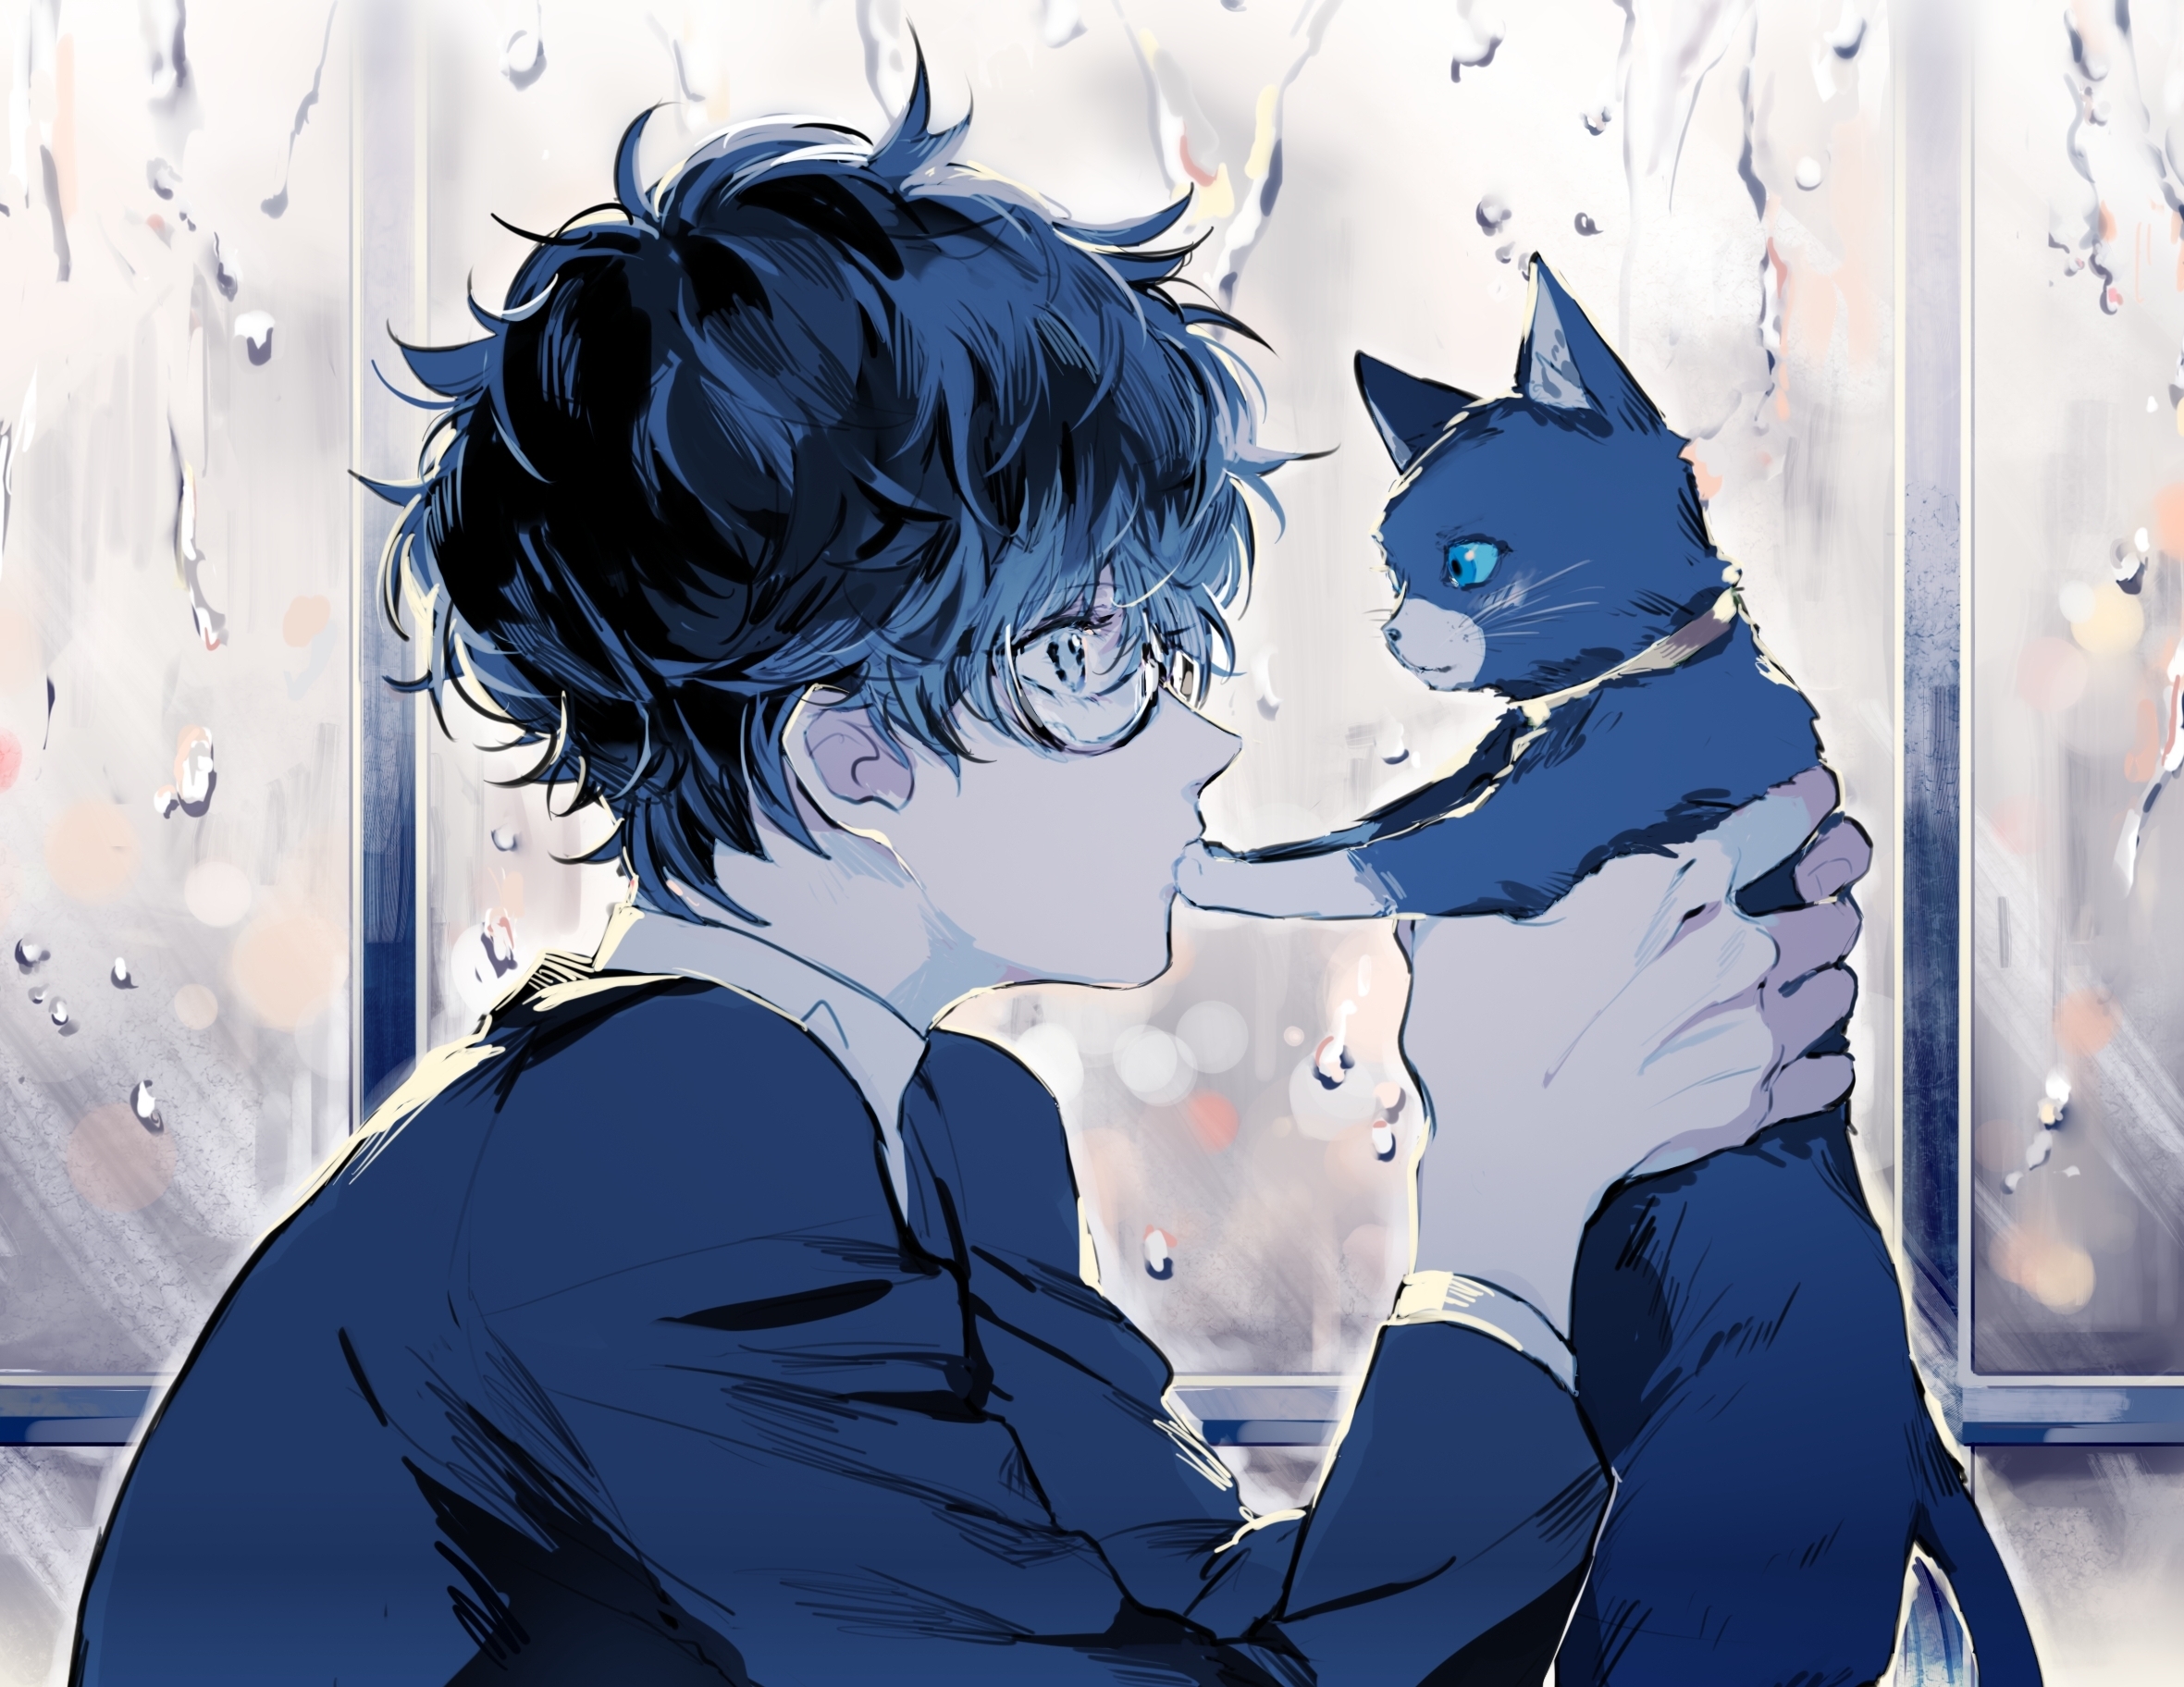 Wallpaper Profile View, Anime Boy, Kurusu Akira, Cute, Persona Cat, Glasses:2361x1824